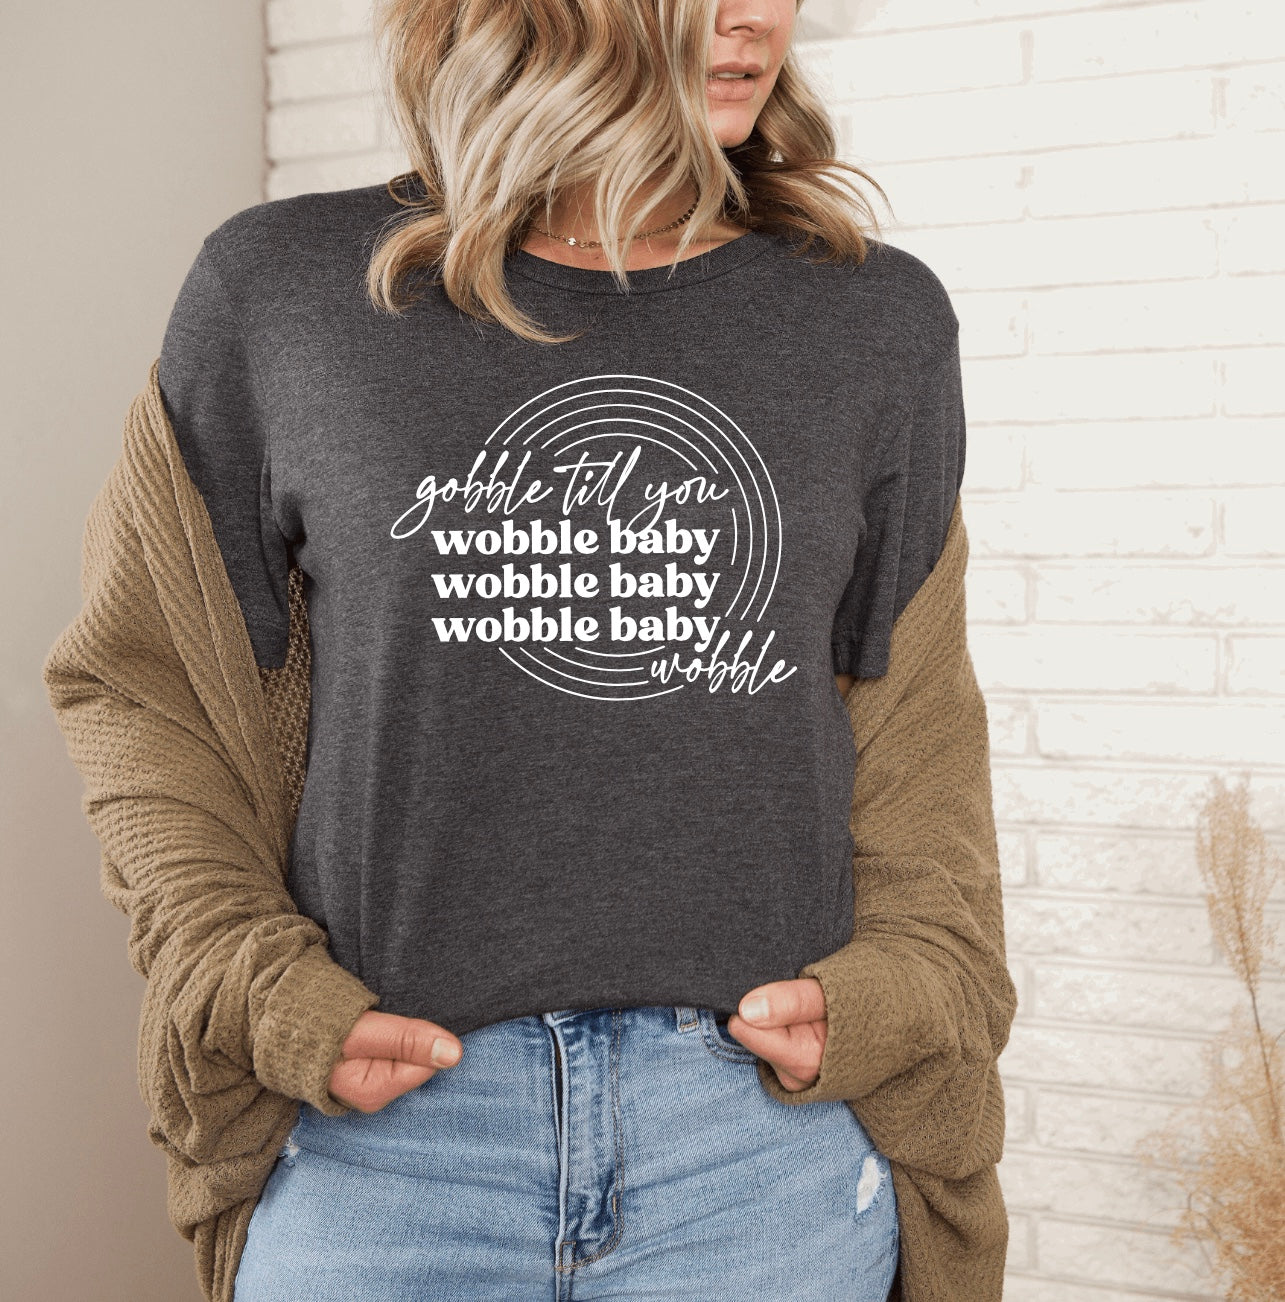 Gobble til you wobble baby | Thanksgiving t-shirt in heather dark grey